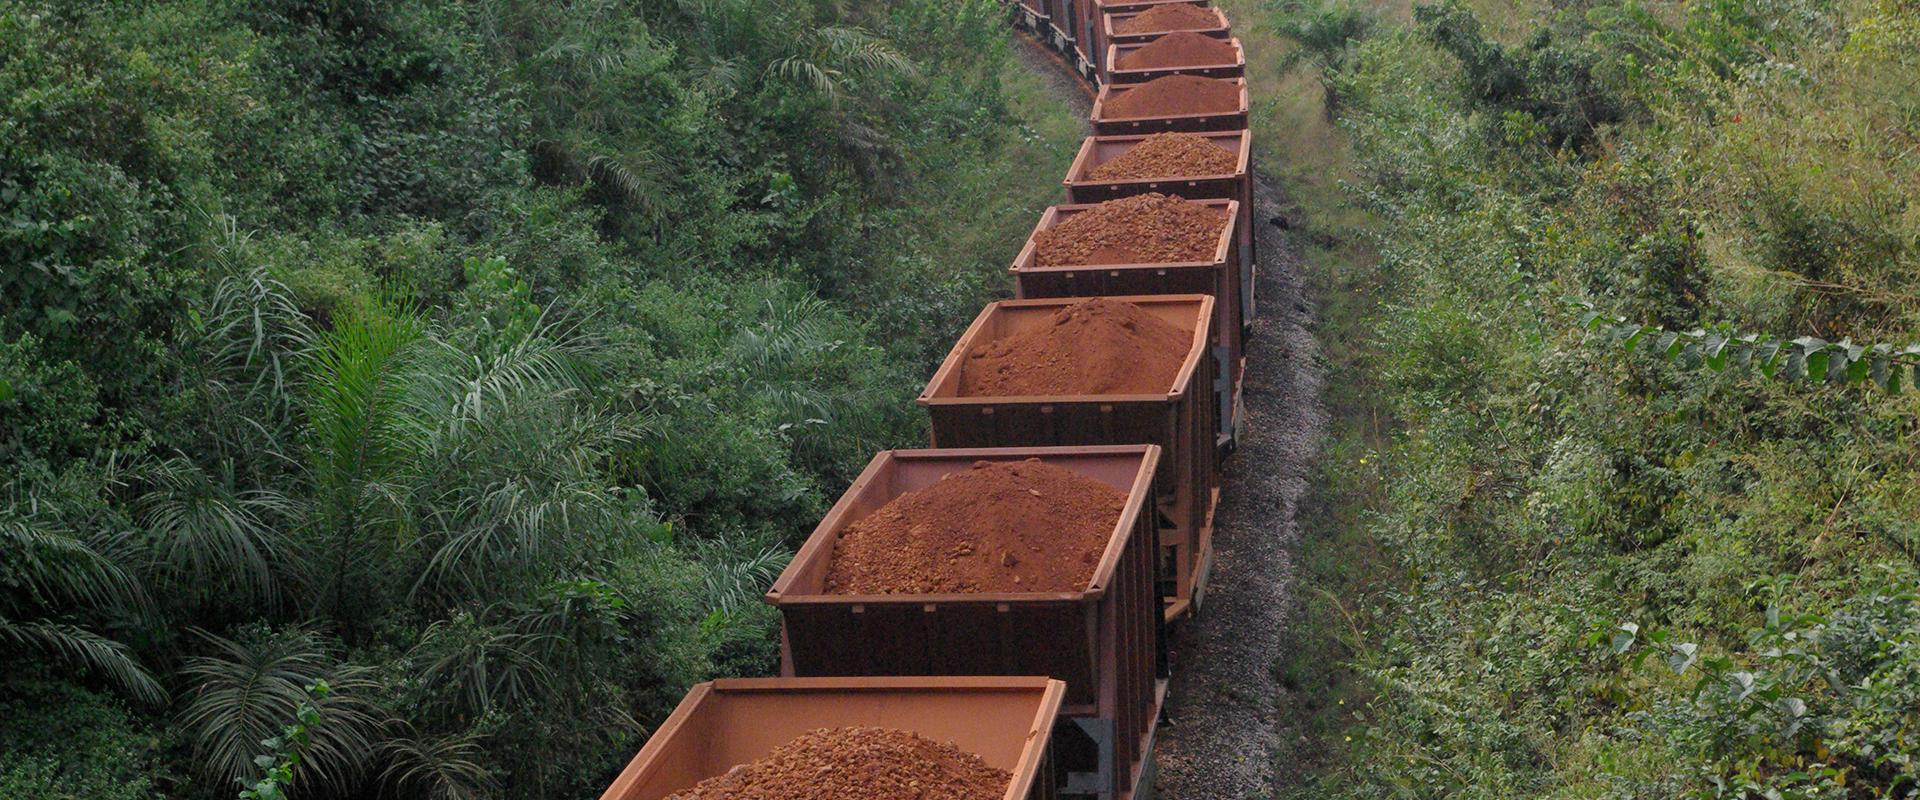 Wagons carrying bauxite, Guinea